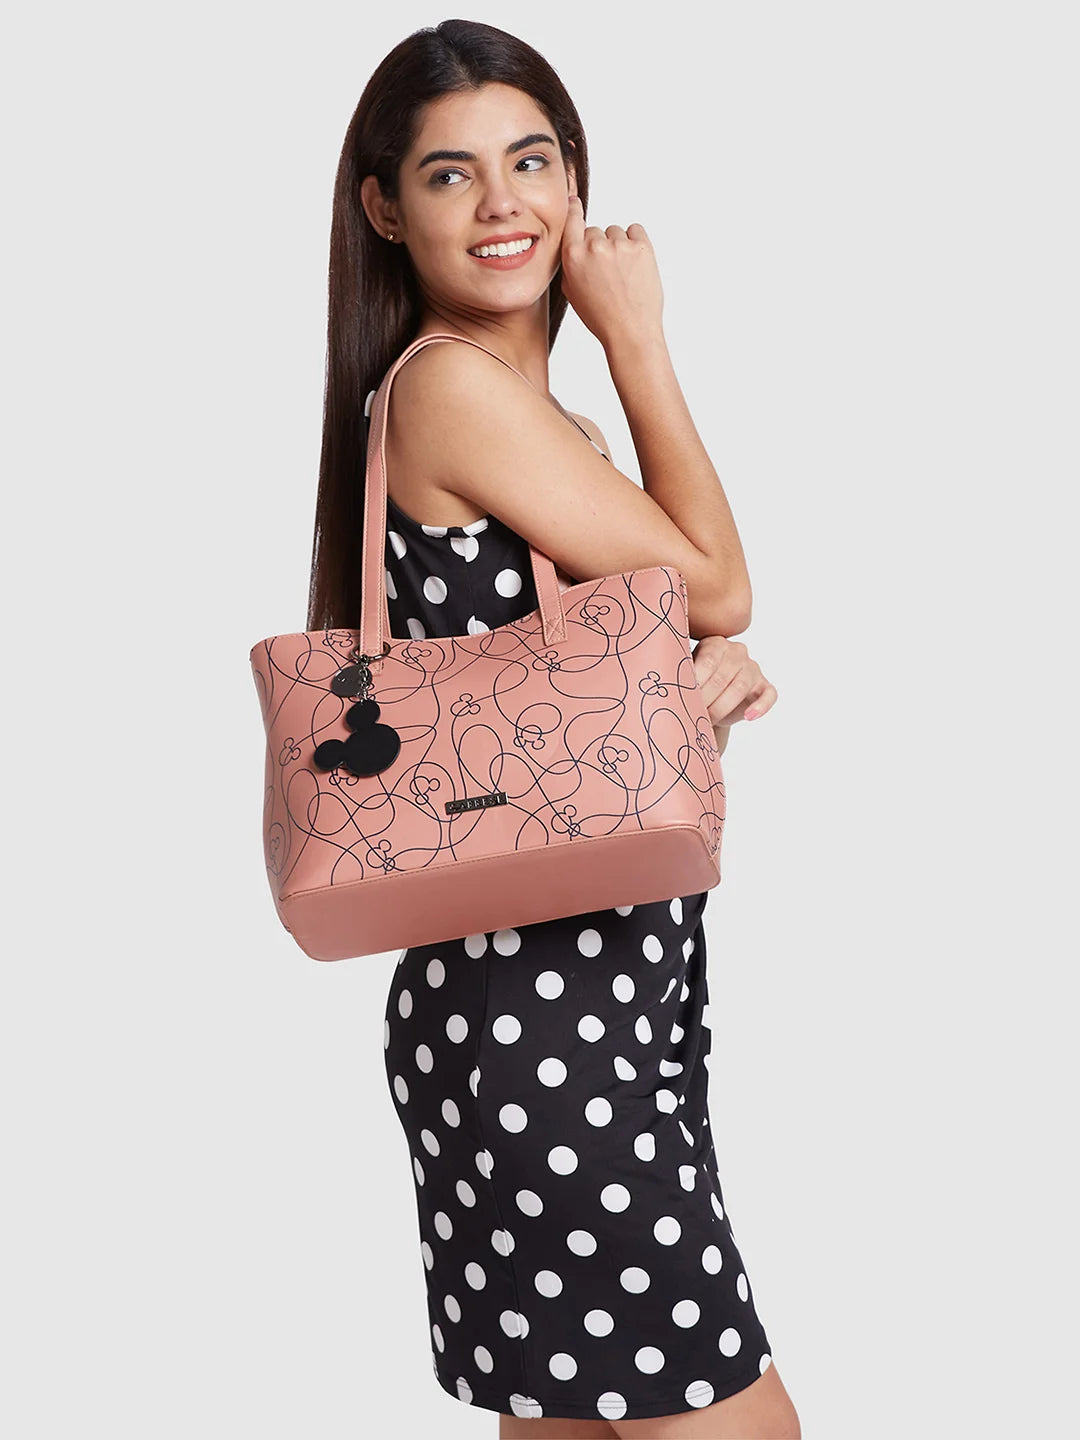 Disney Mickey Mouse Cartoon bucket bag Shoulder Shopper lady handbag w |  Bags, Leather organization, Leather bucket bag